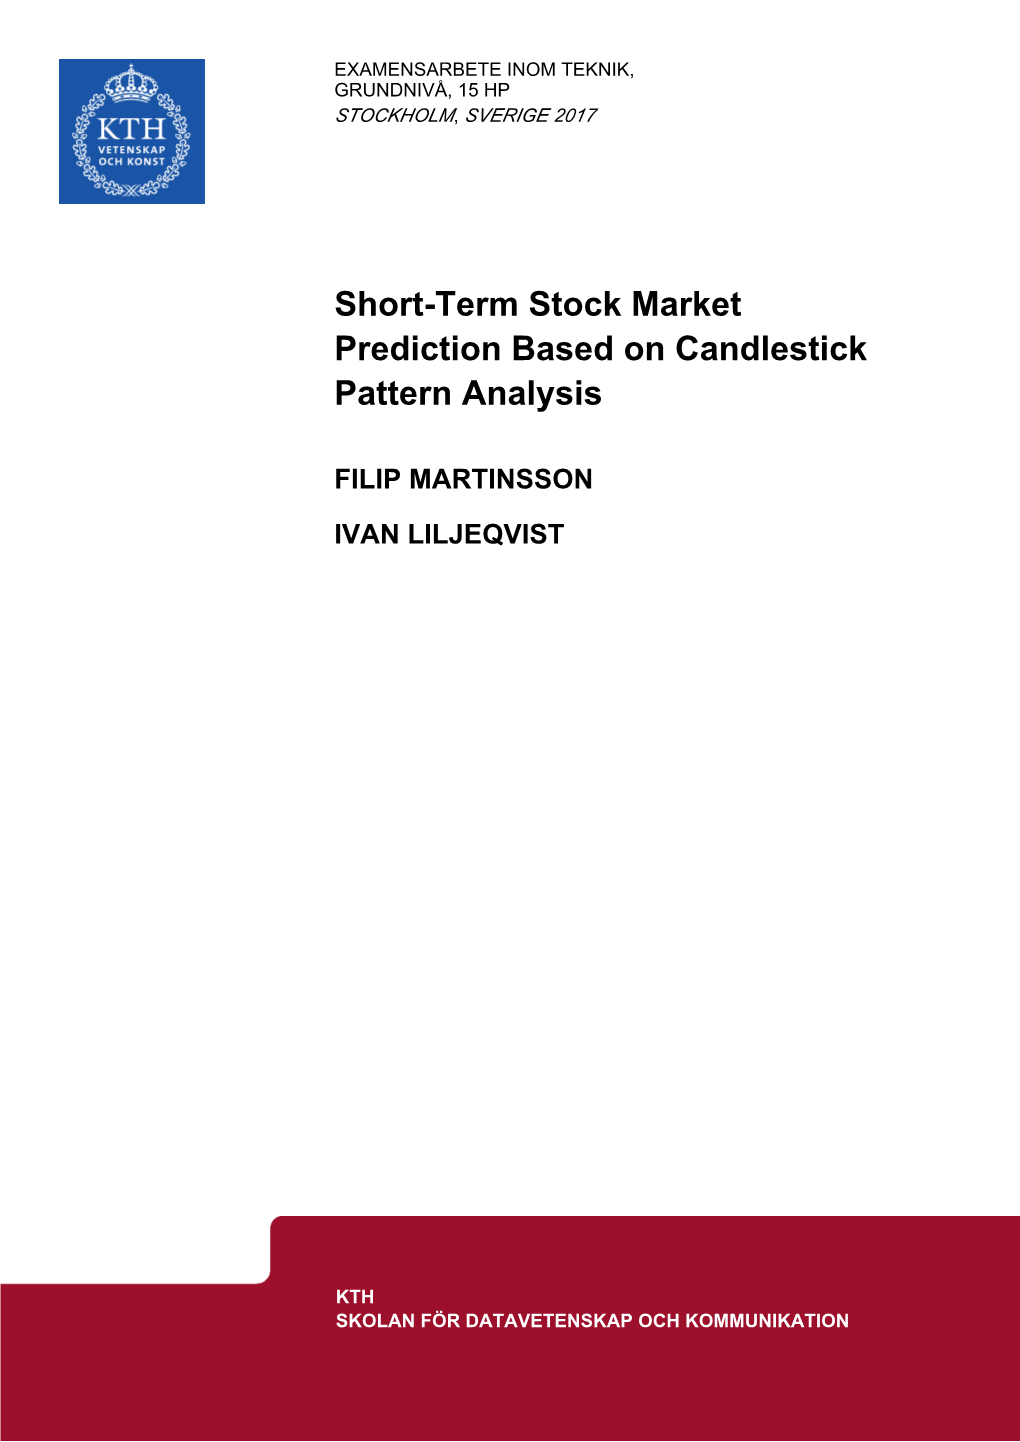 Short-Term Stock Market Prediction Based on Candlestick Pattern Analysis